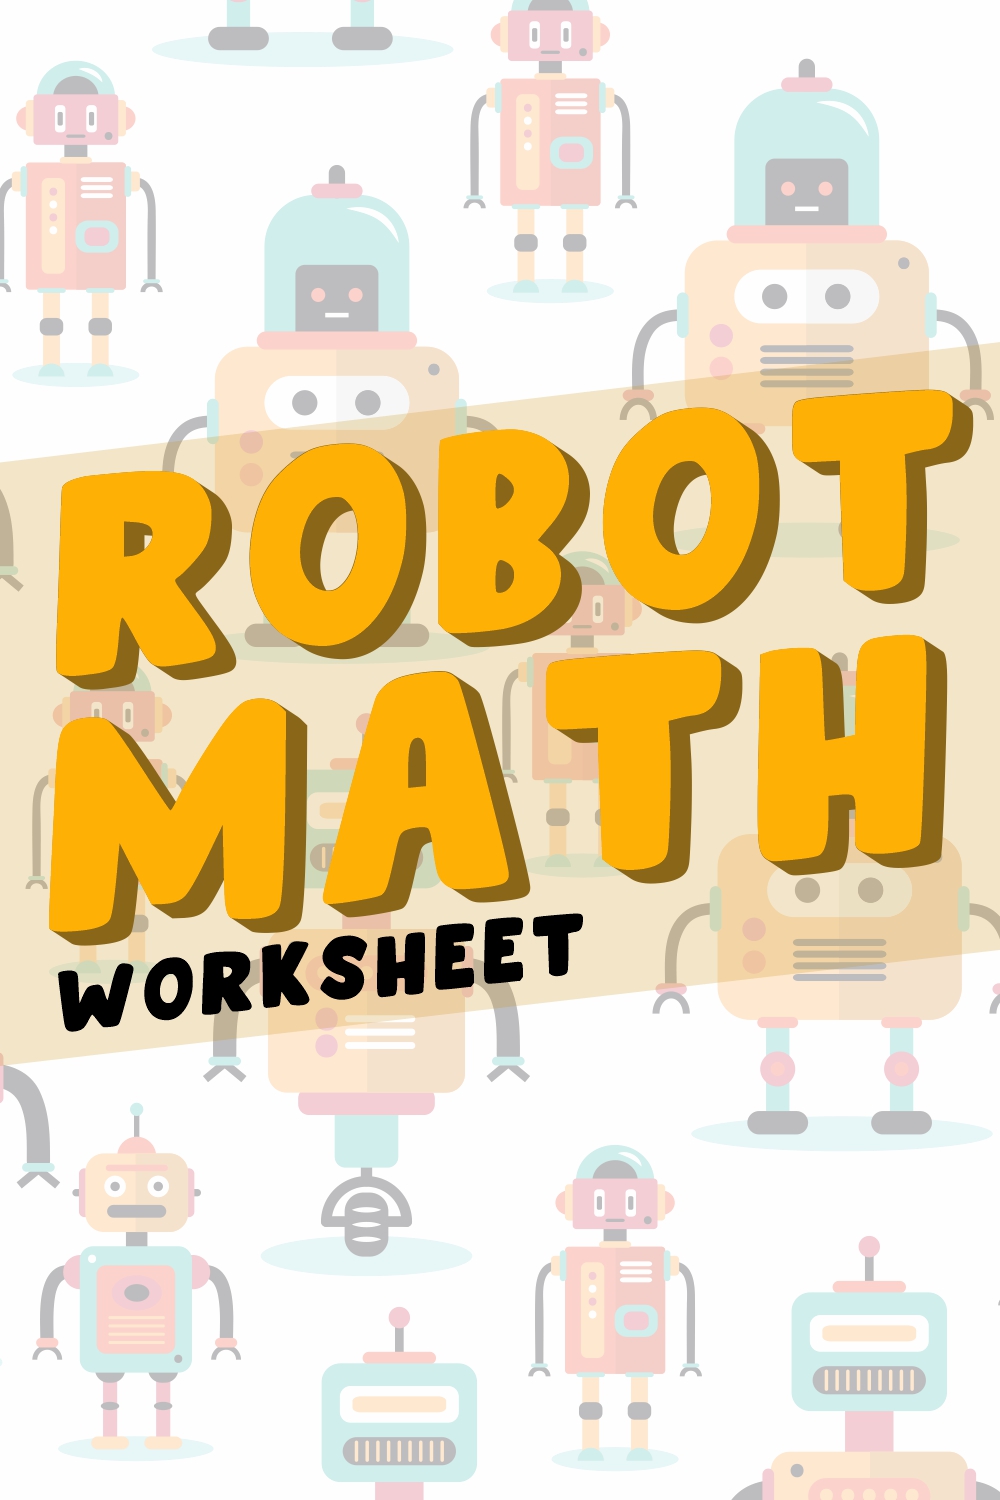 16 Images of Robot Math Worksheets